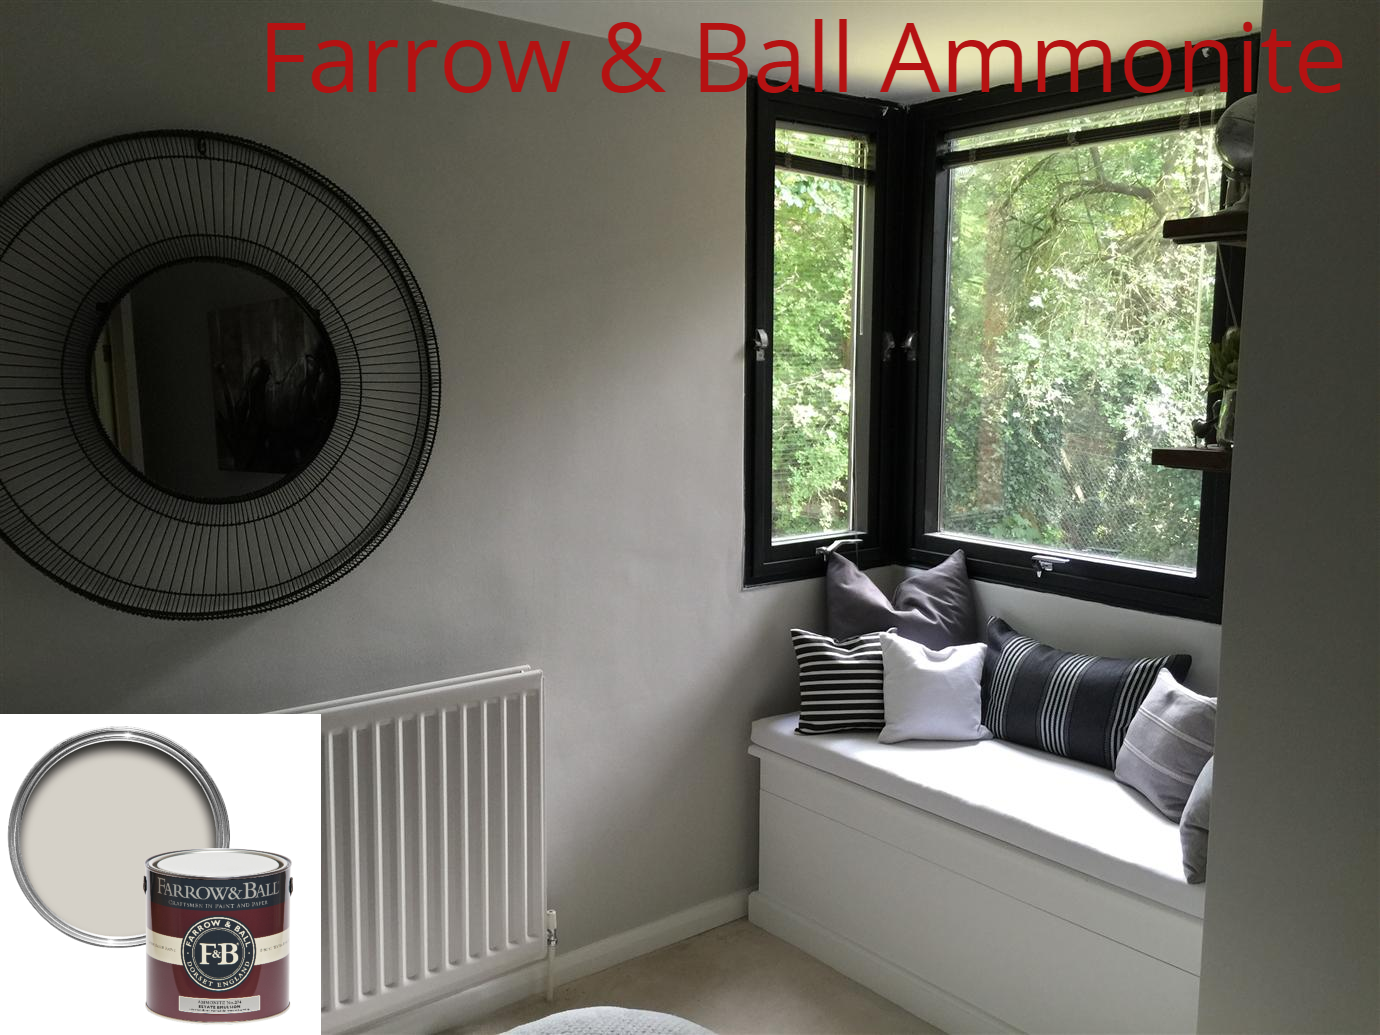 Farrow & Ball Ammonite